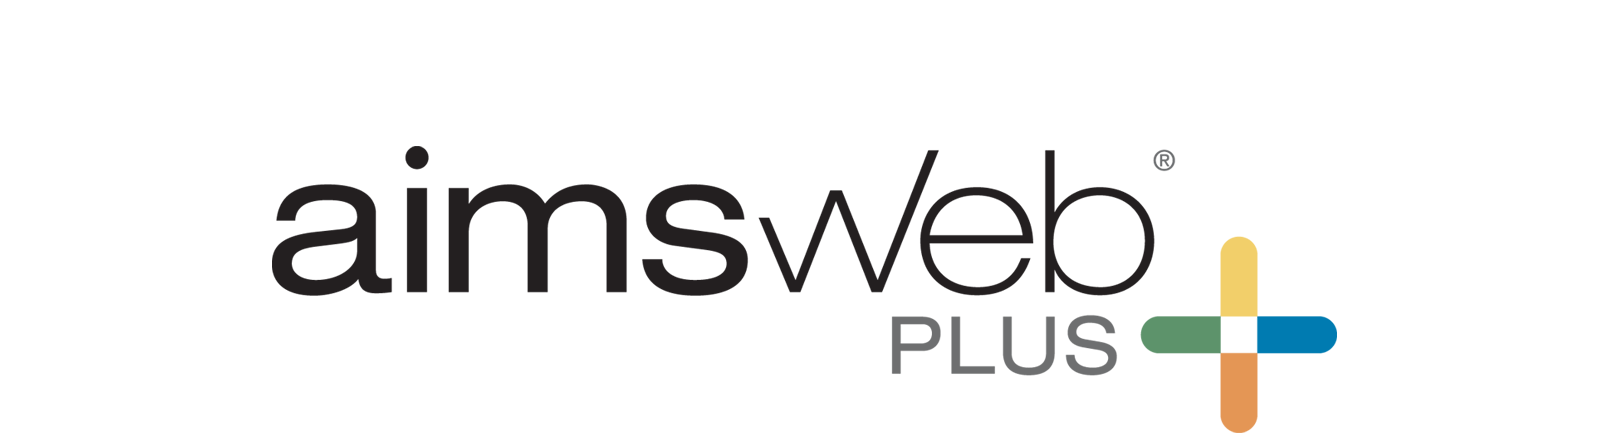 aimswebPlus logo